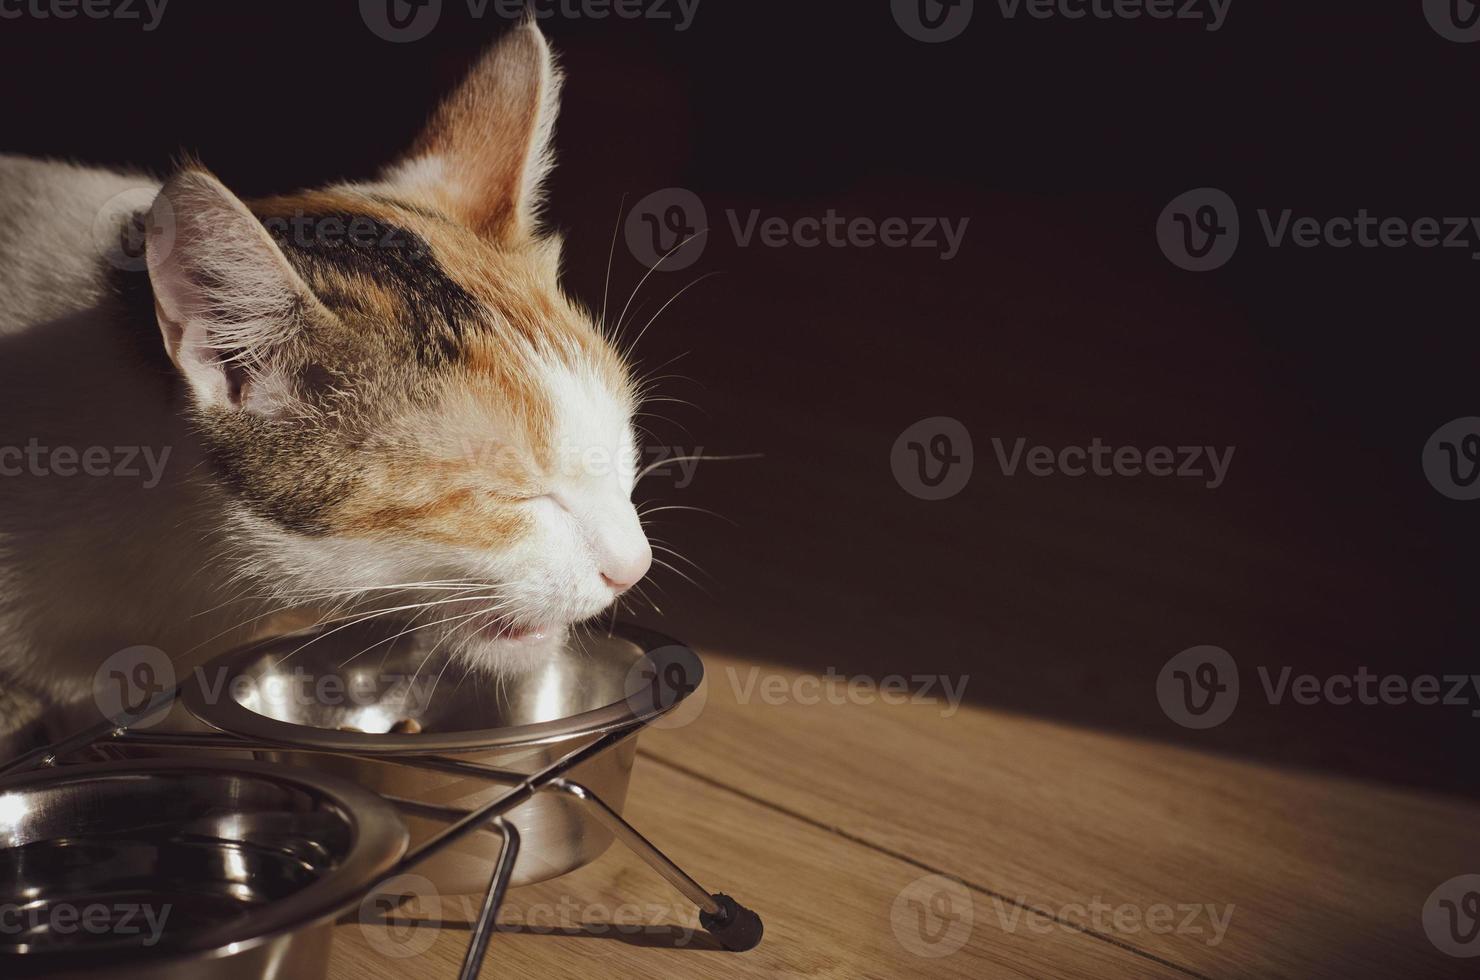 hongerige driekleurige kat eet droogvoer foto